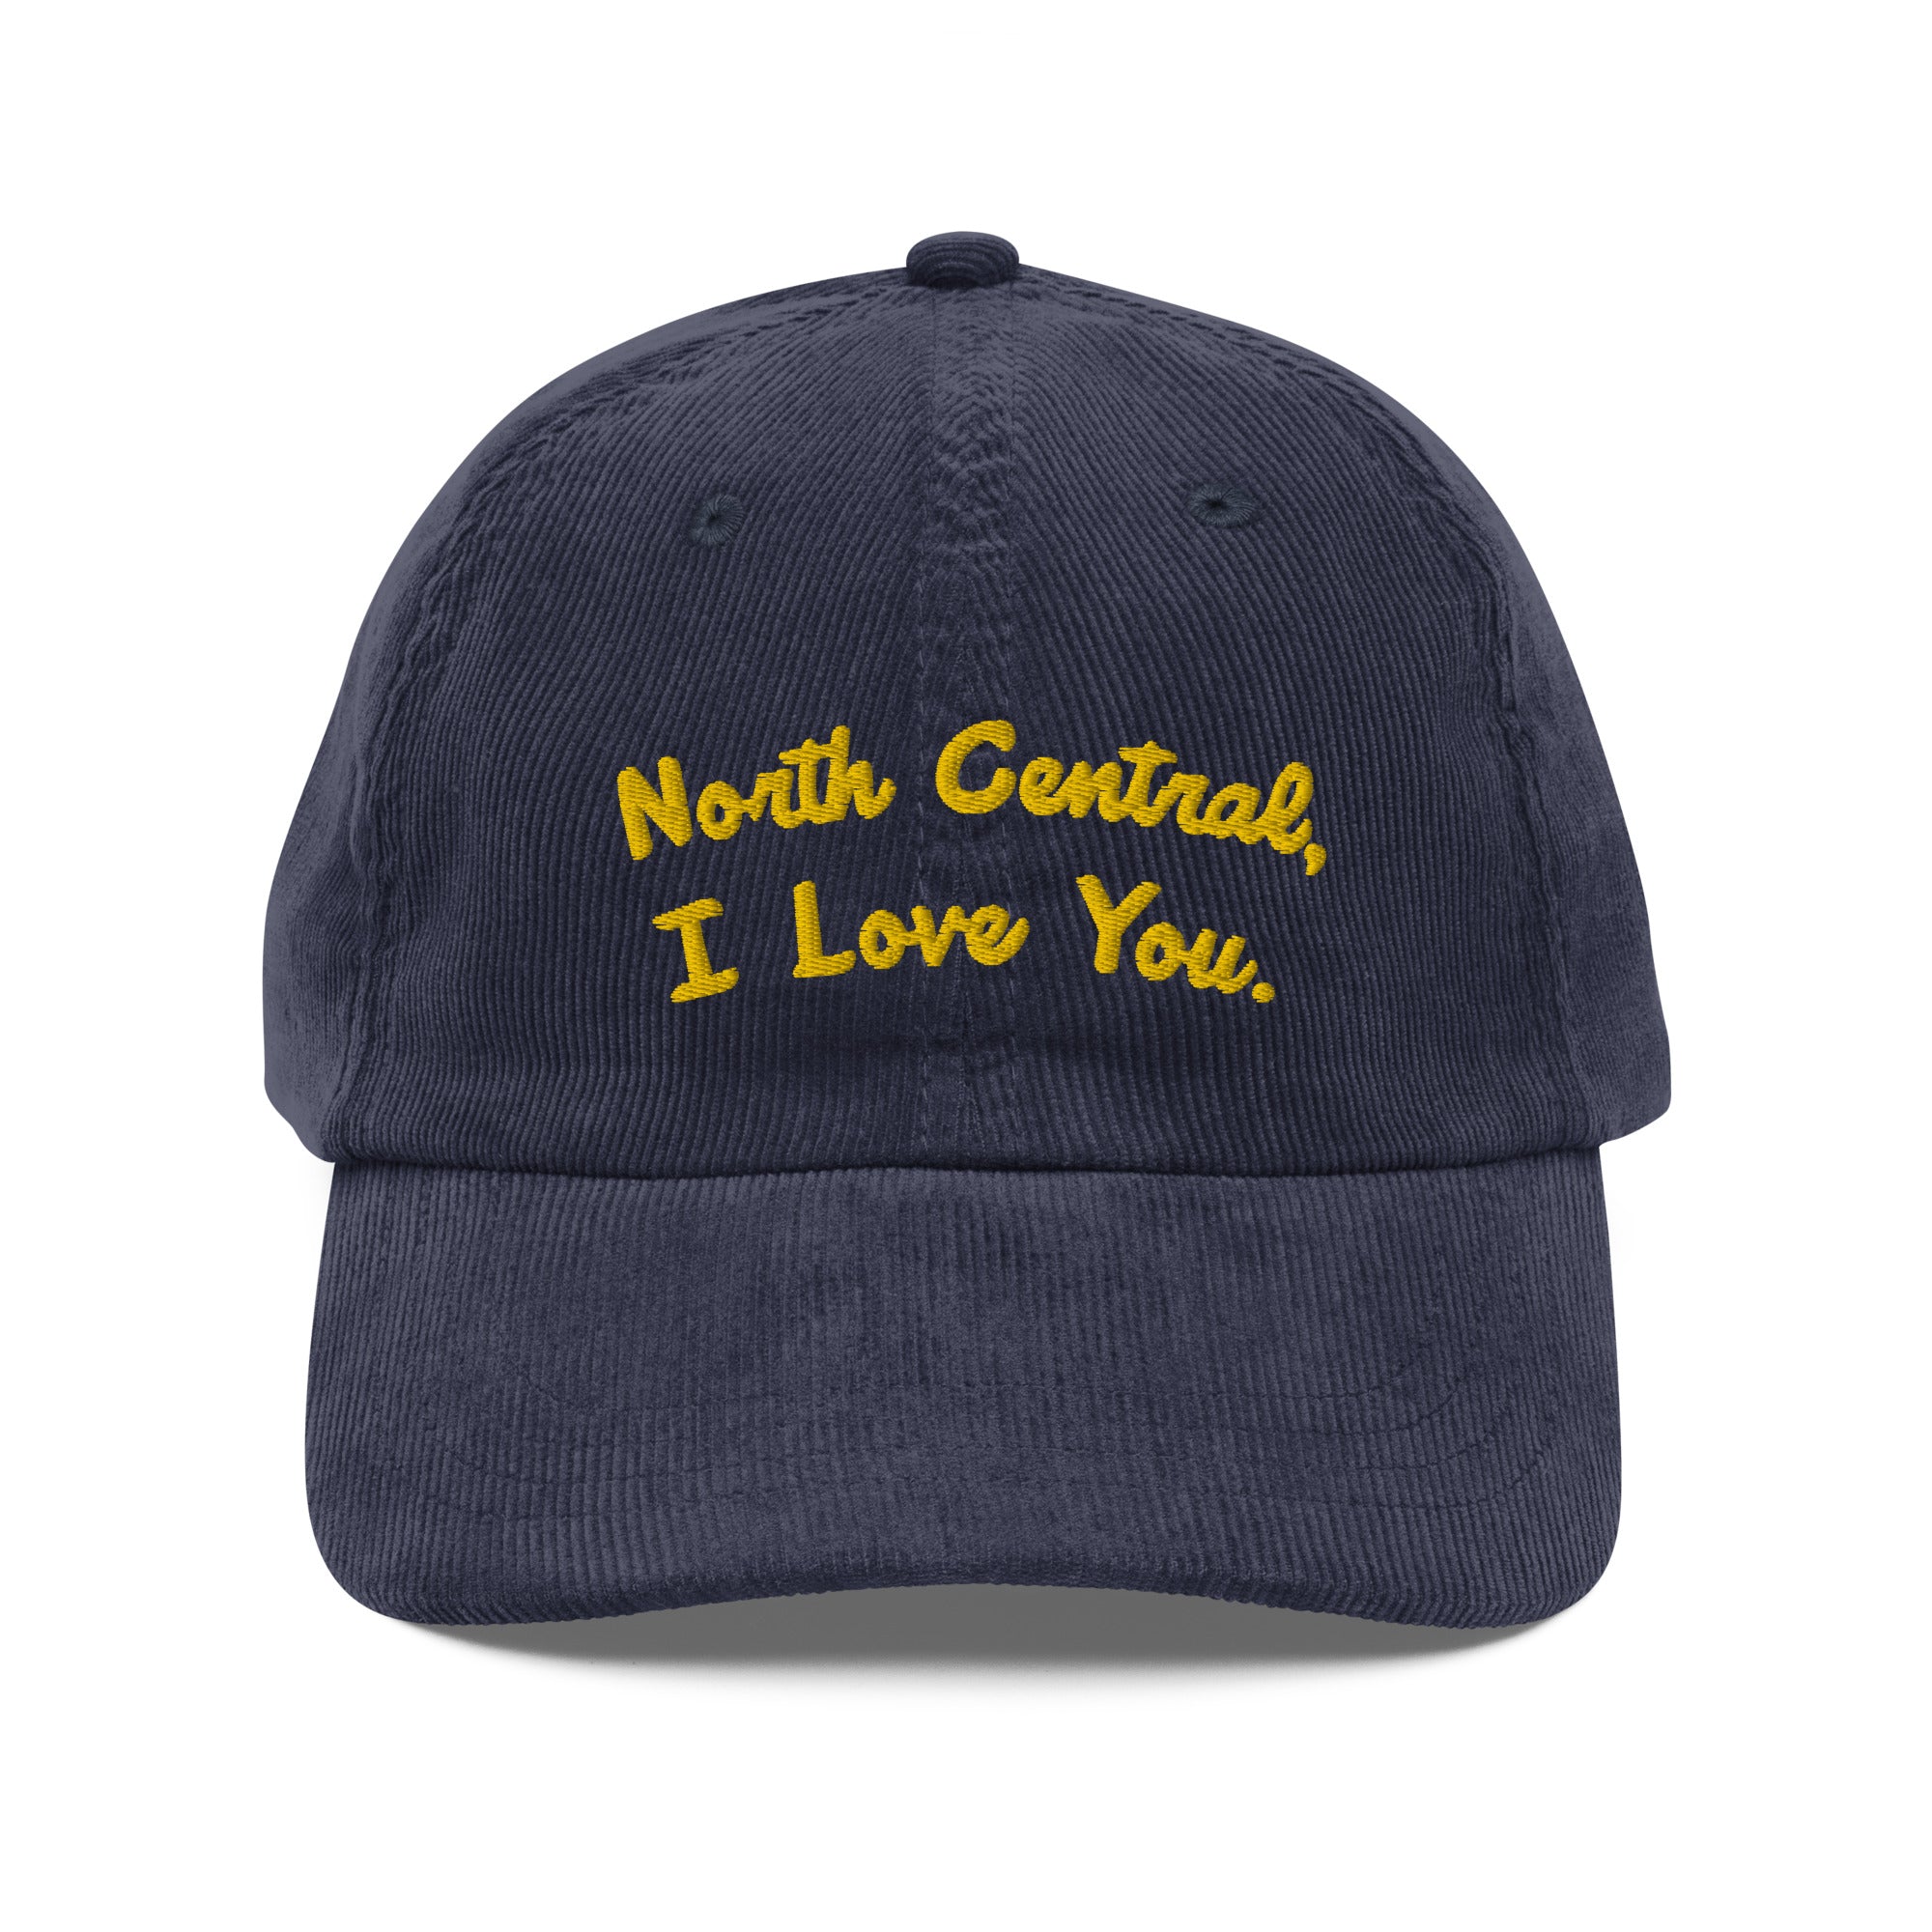 I Love You Corduroy Hat - North Central | Phoenix, AZ